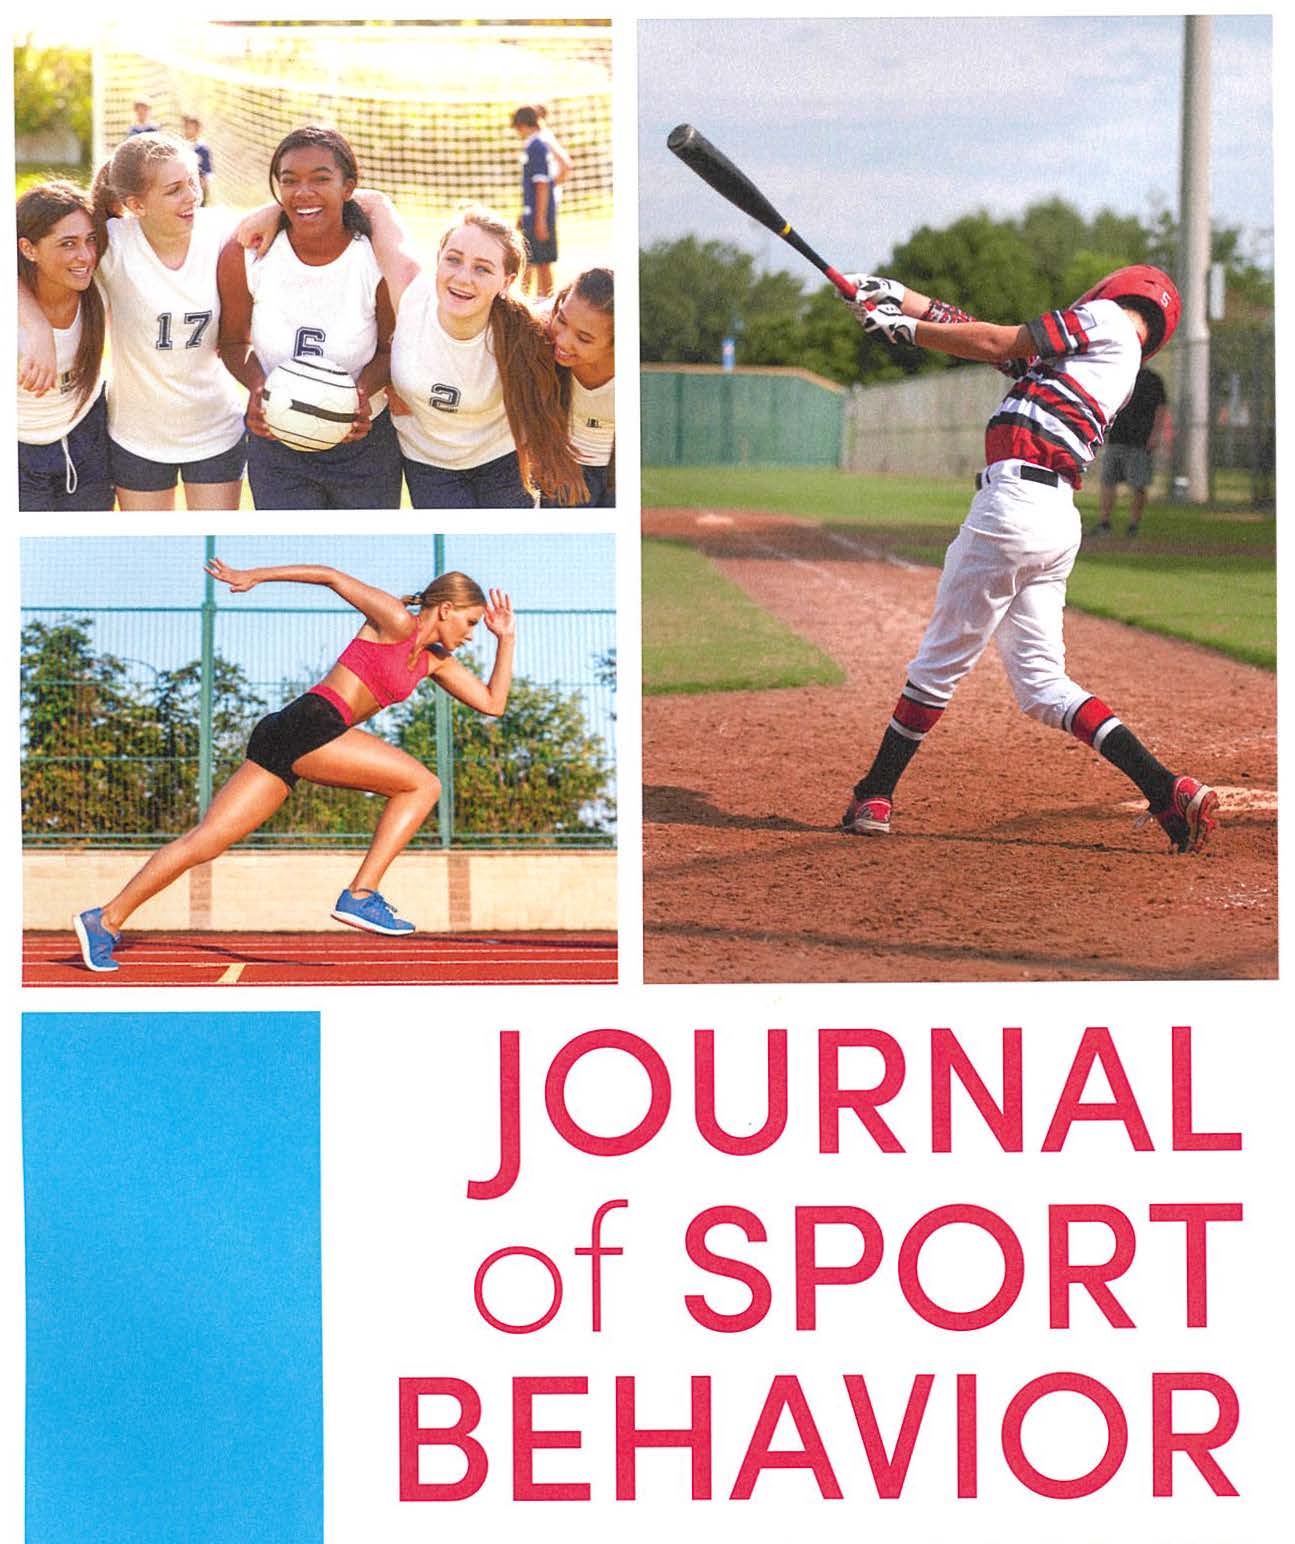 					View Vol. 44 No. 2 (2021): Journal of Sport Behavior
				